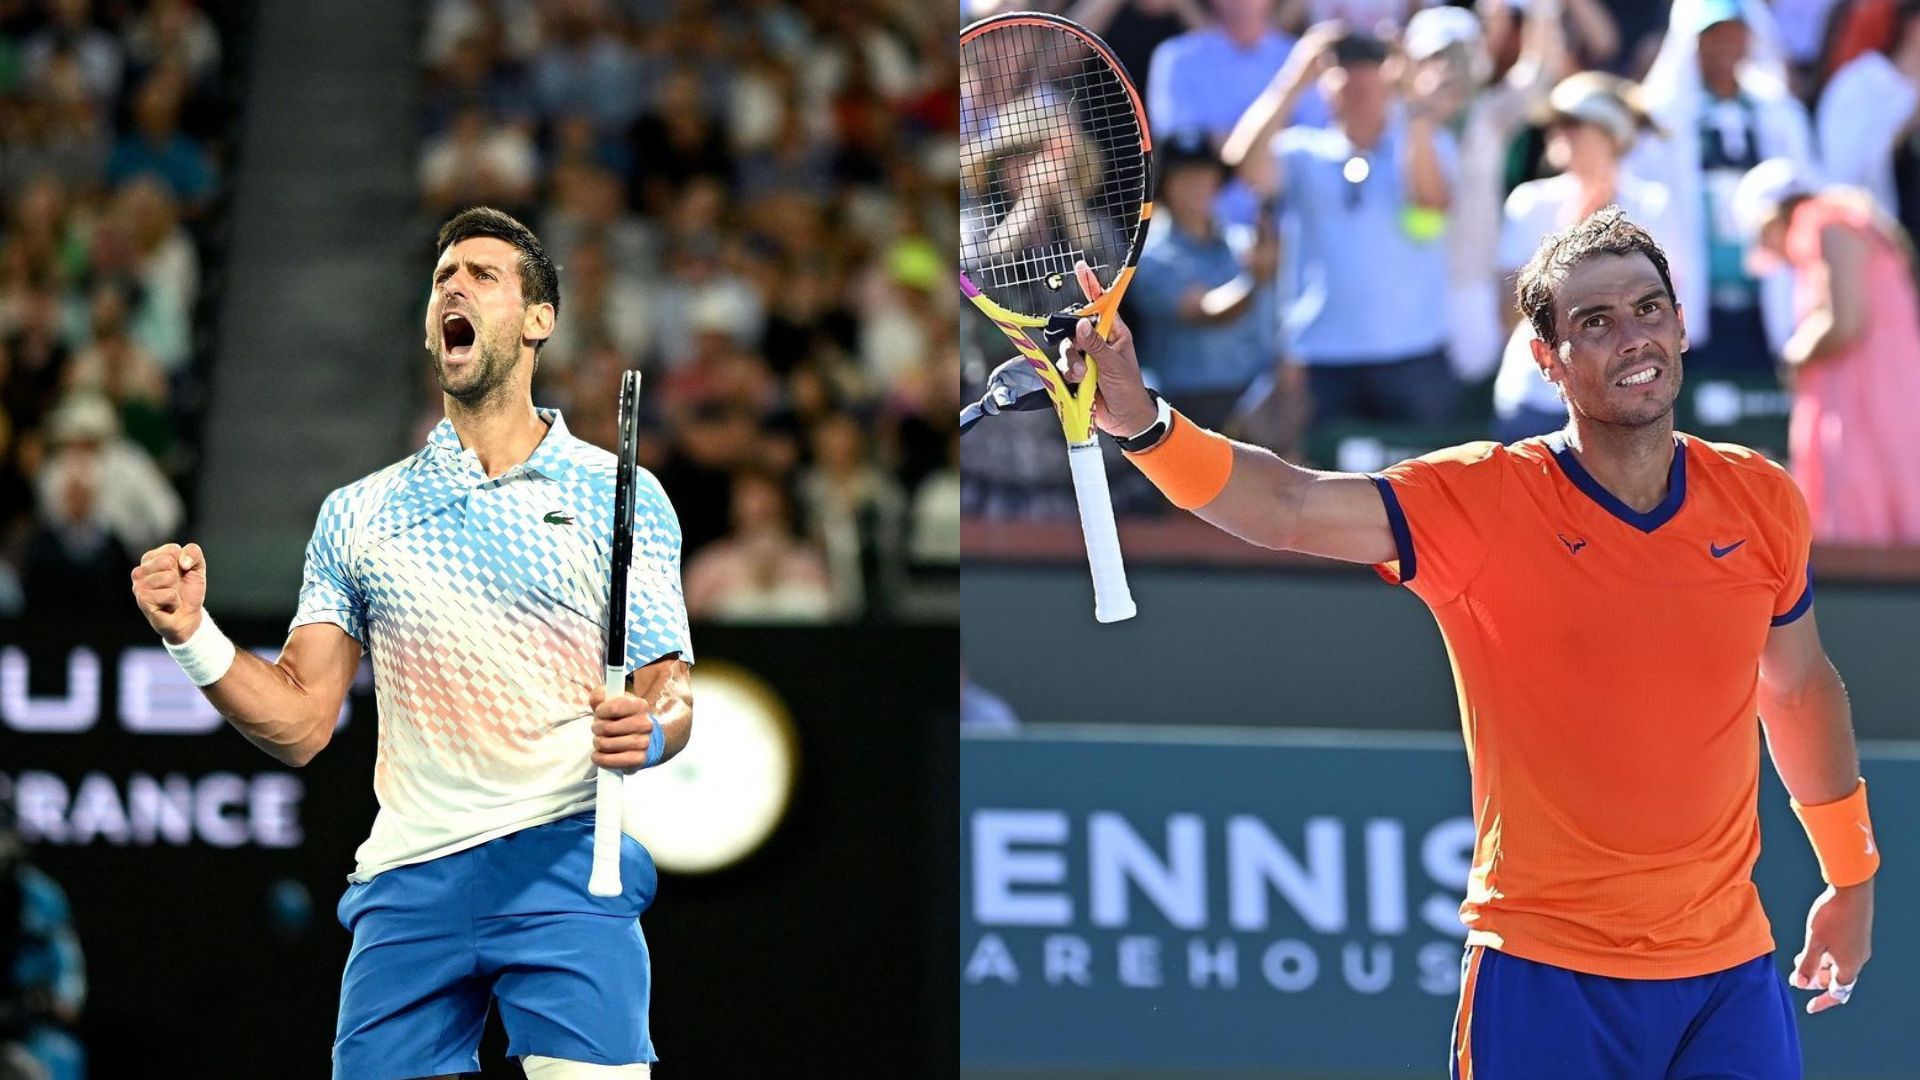 Rafael Nadal vs Novak Djokovic Who Is The Better Player?